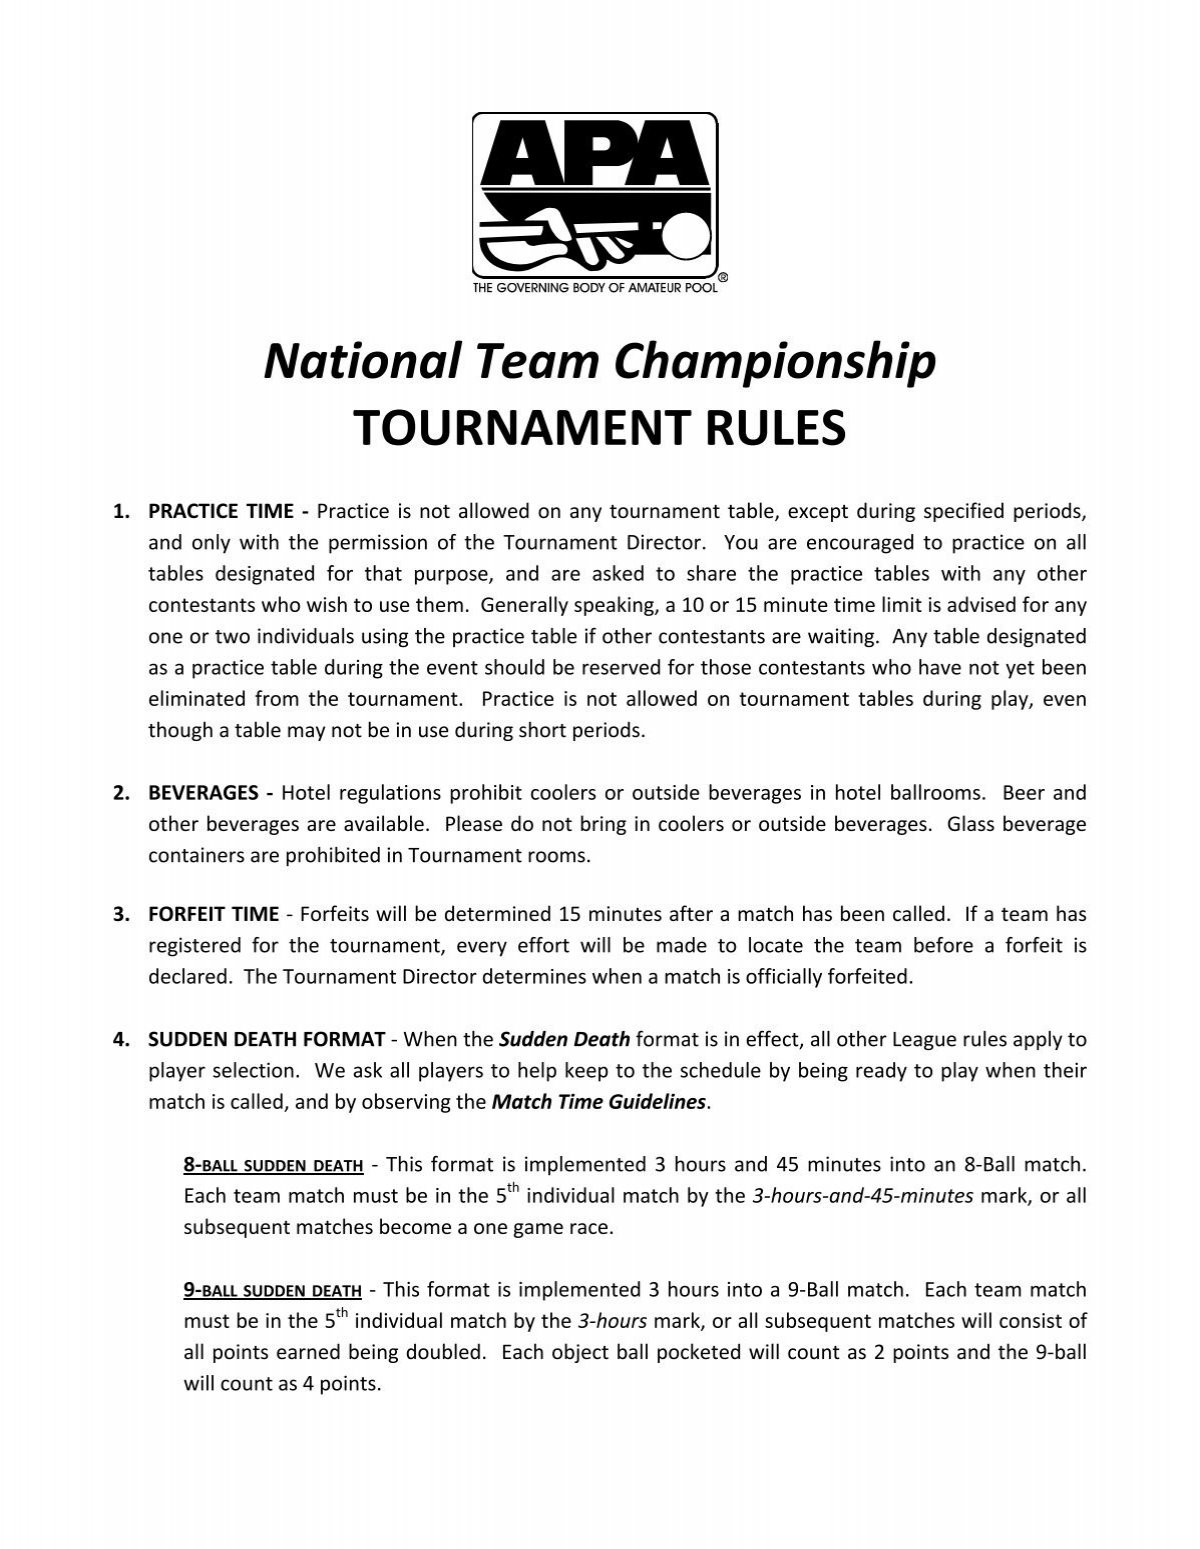 APA 8-9 Ball Game Rules, PDF, Individual Sports